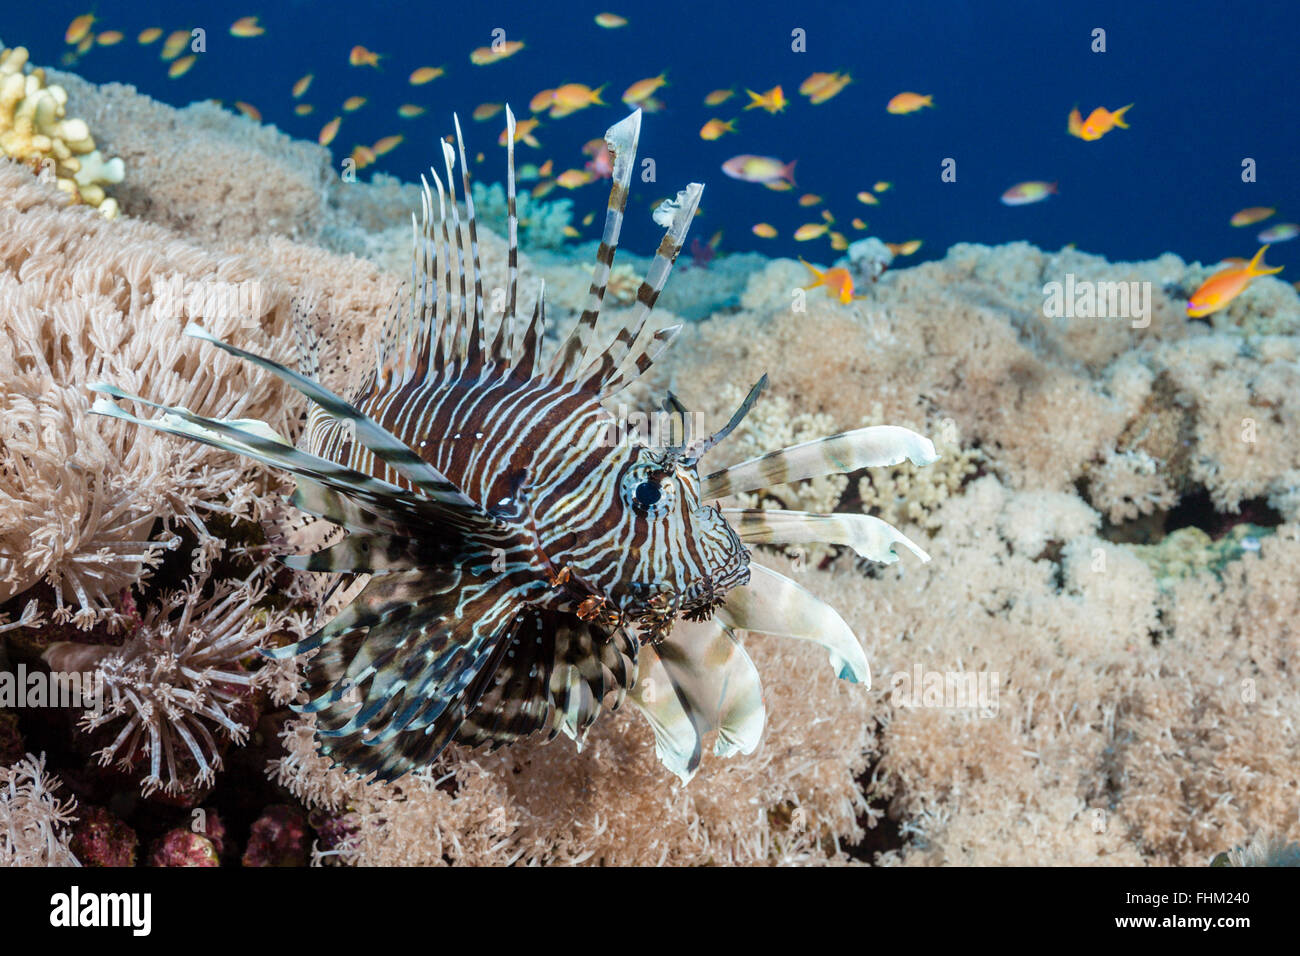 Lionfish, Pterois miles, Shaab Rumi, Red Sea, Sudan Stock Photo